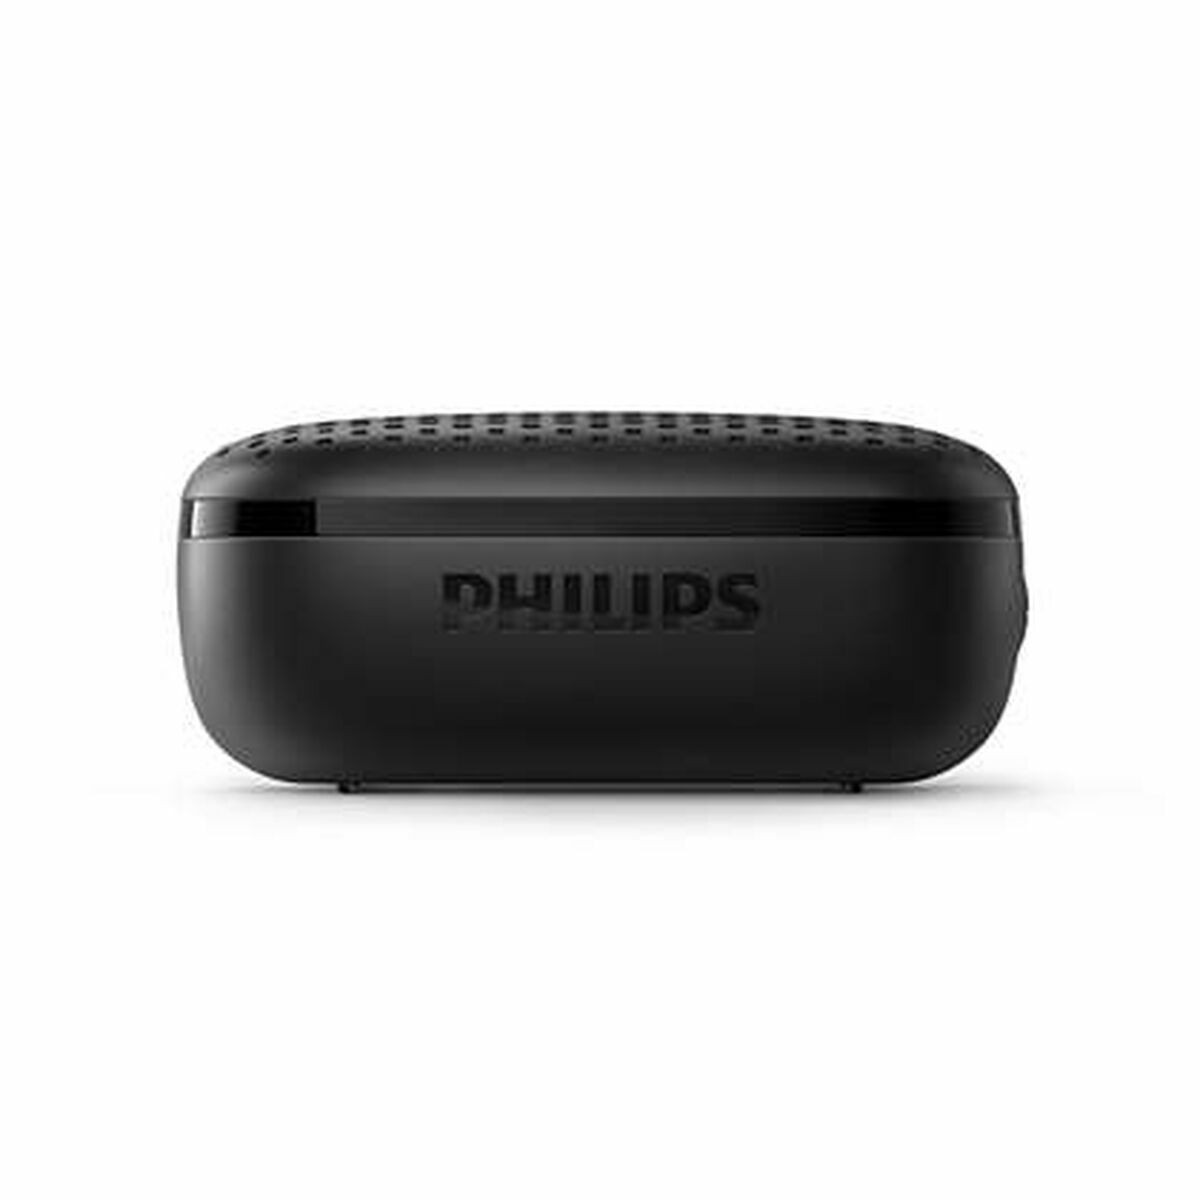 Bluetooth -Lautsprecher Philips Tas2505b/00 Black 3 W